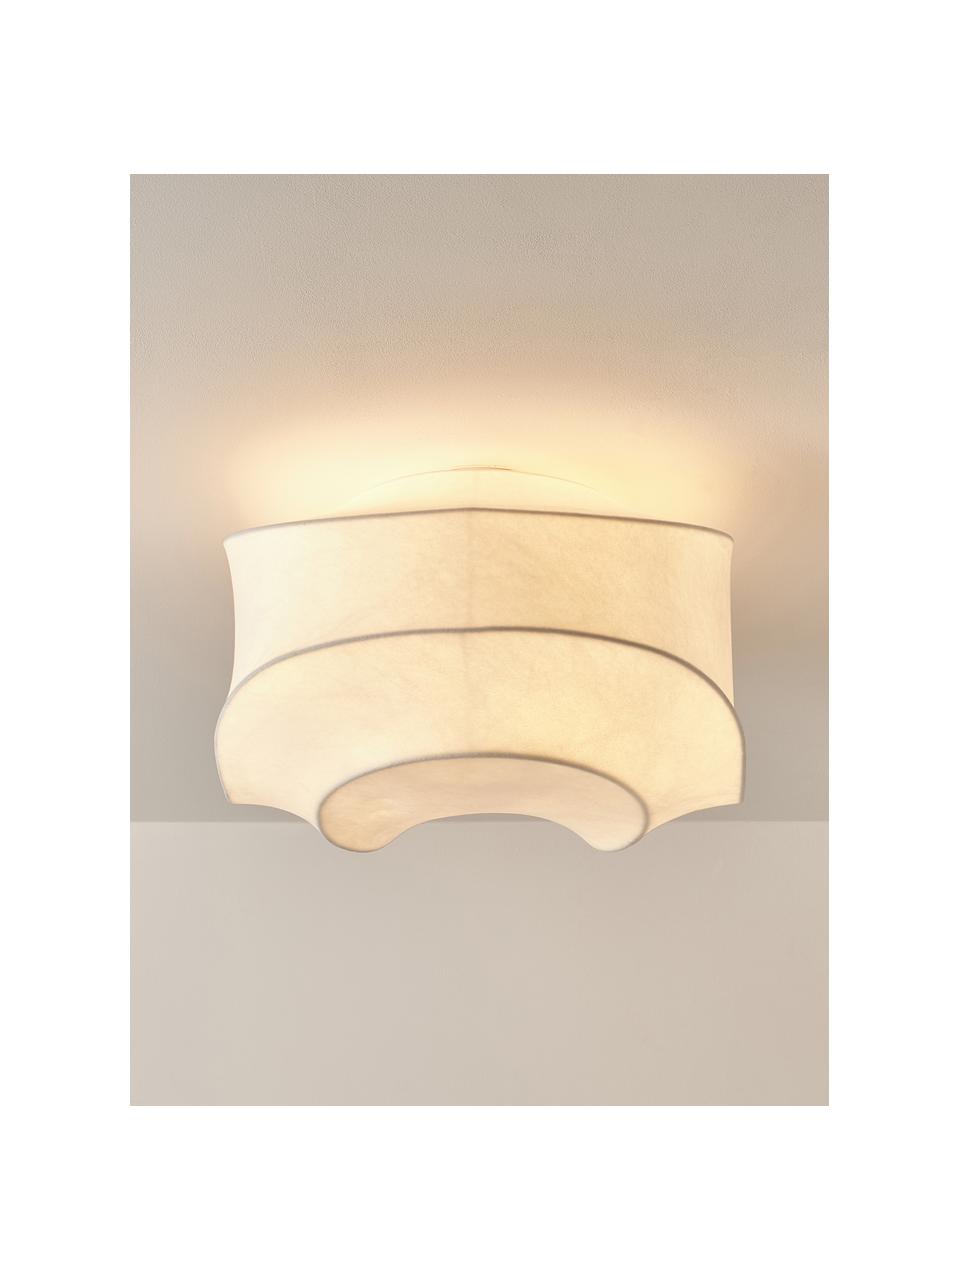 Plafondlamp Pearl in zijdelook, Lampvoet: metaal, Lampenkap: glas, Roodbruin, B 50 x H 30 cm